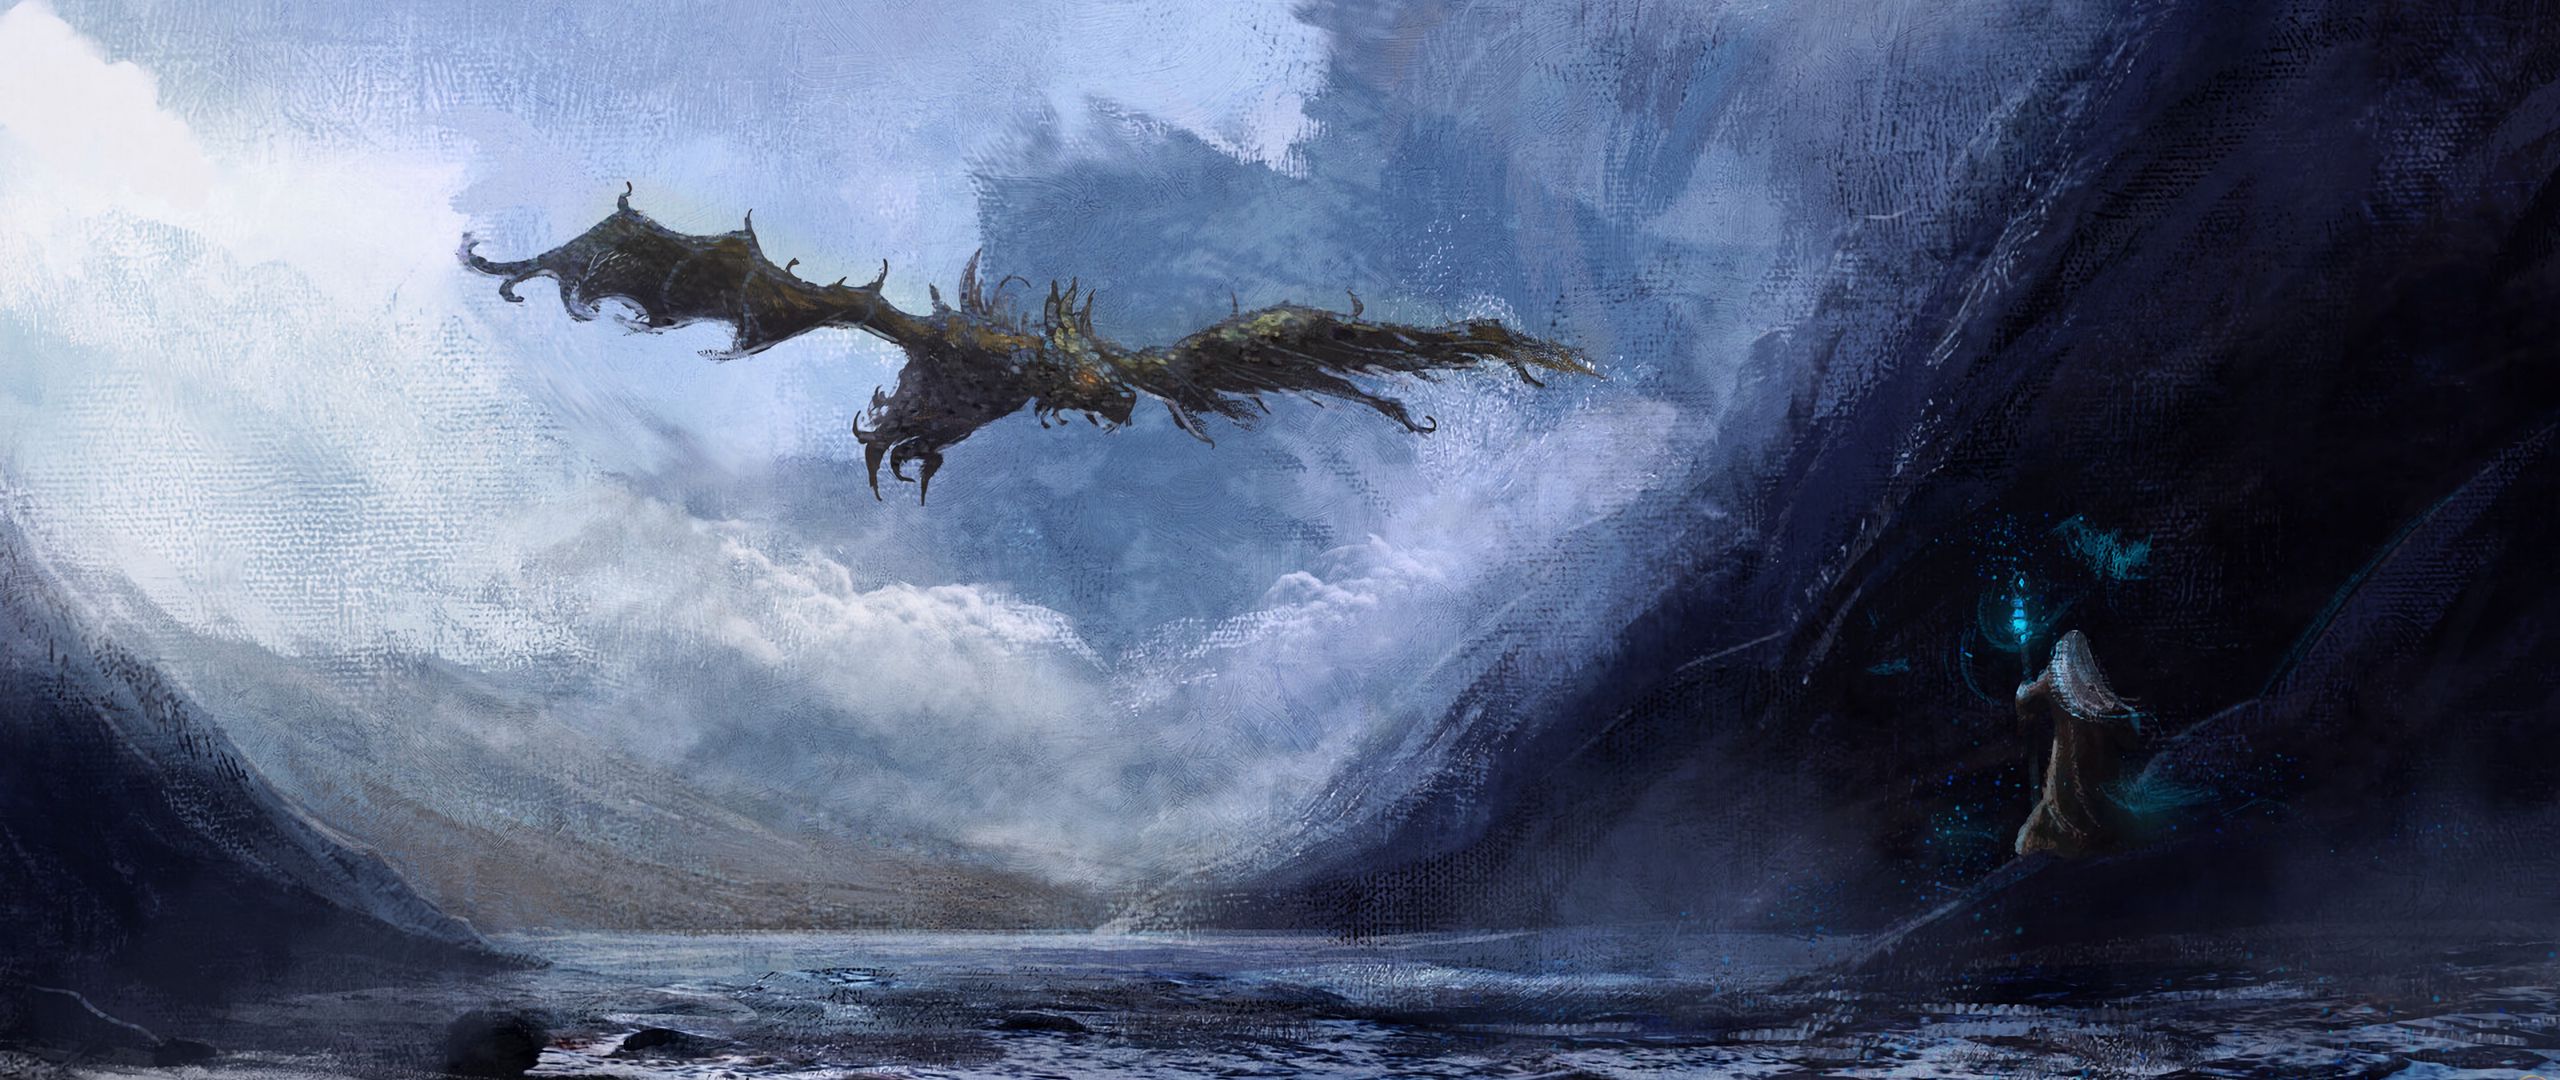 skyrim frost dragon wallpaper